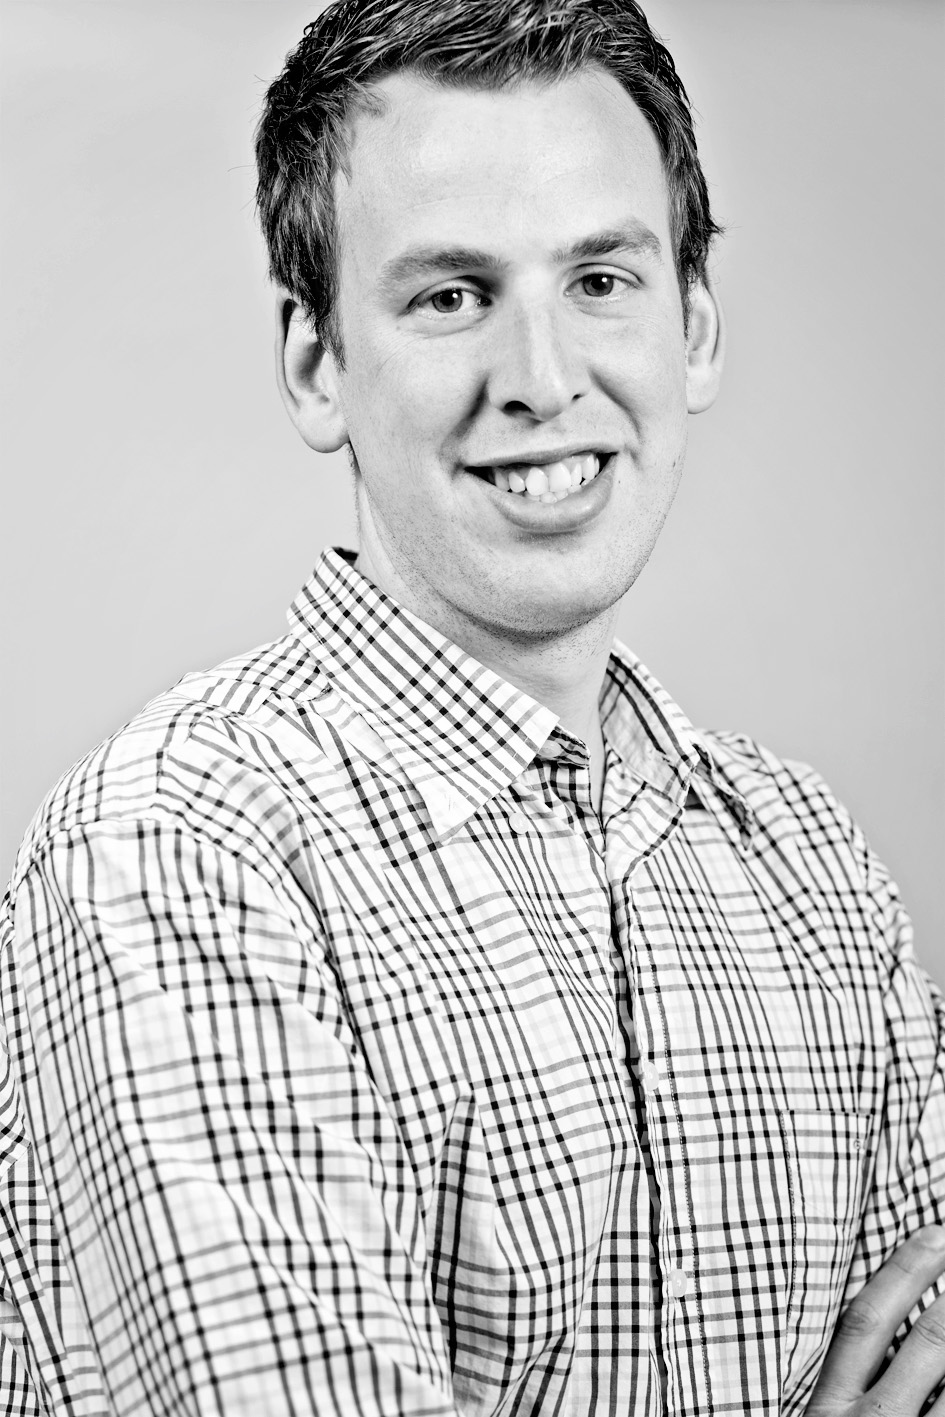 Erik De Neve, Project Leader at Belnet